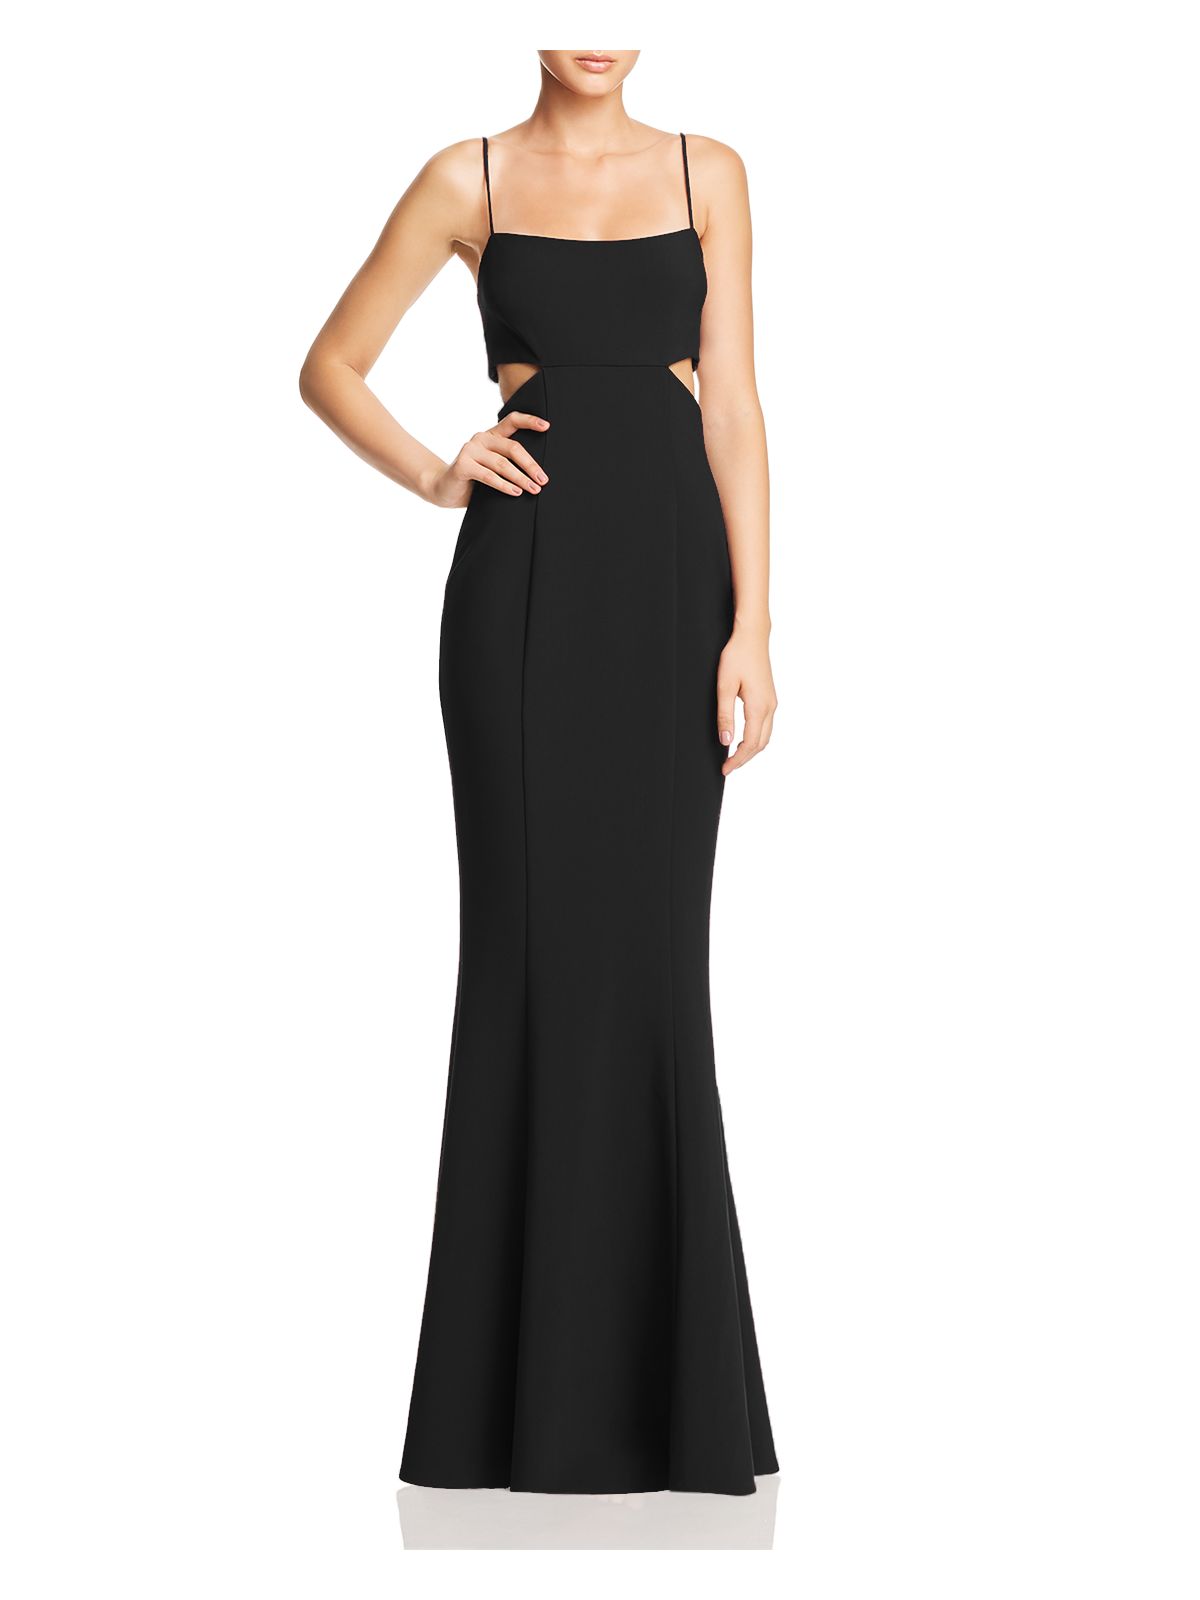 LIKELY Womens Black Spaghetti Strap Full-Length Sheath Formal Dress 14